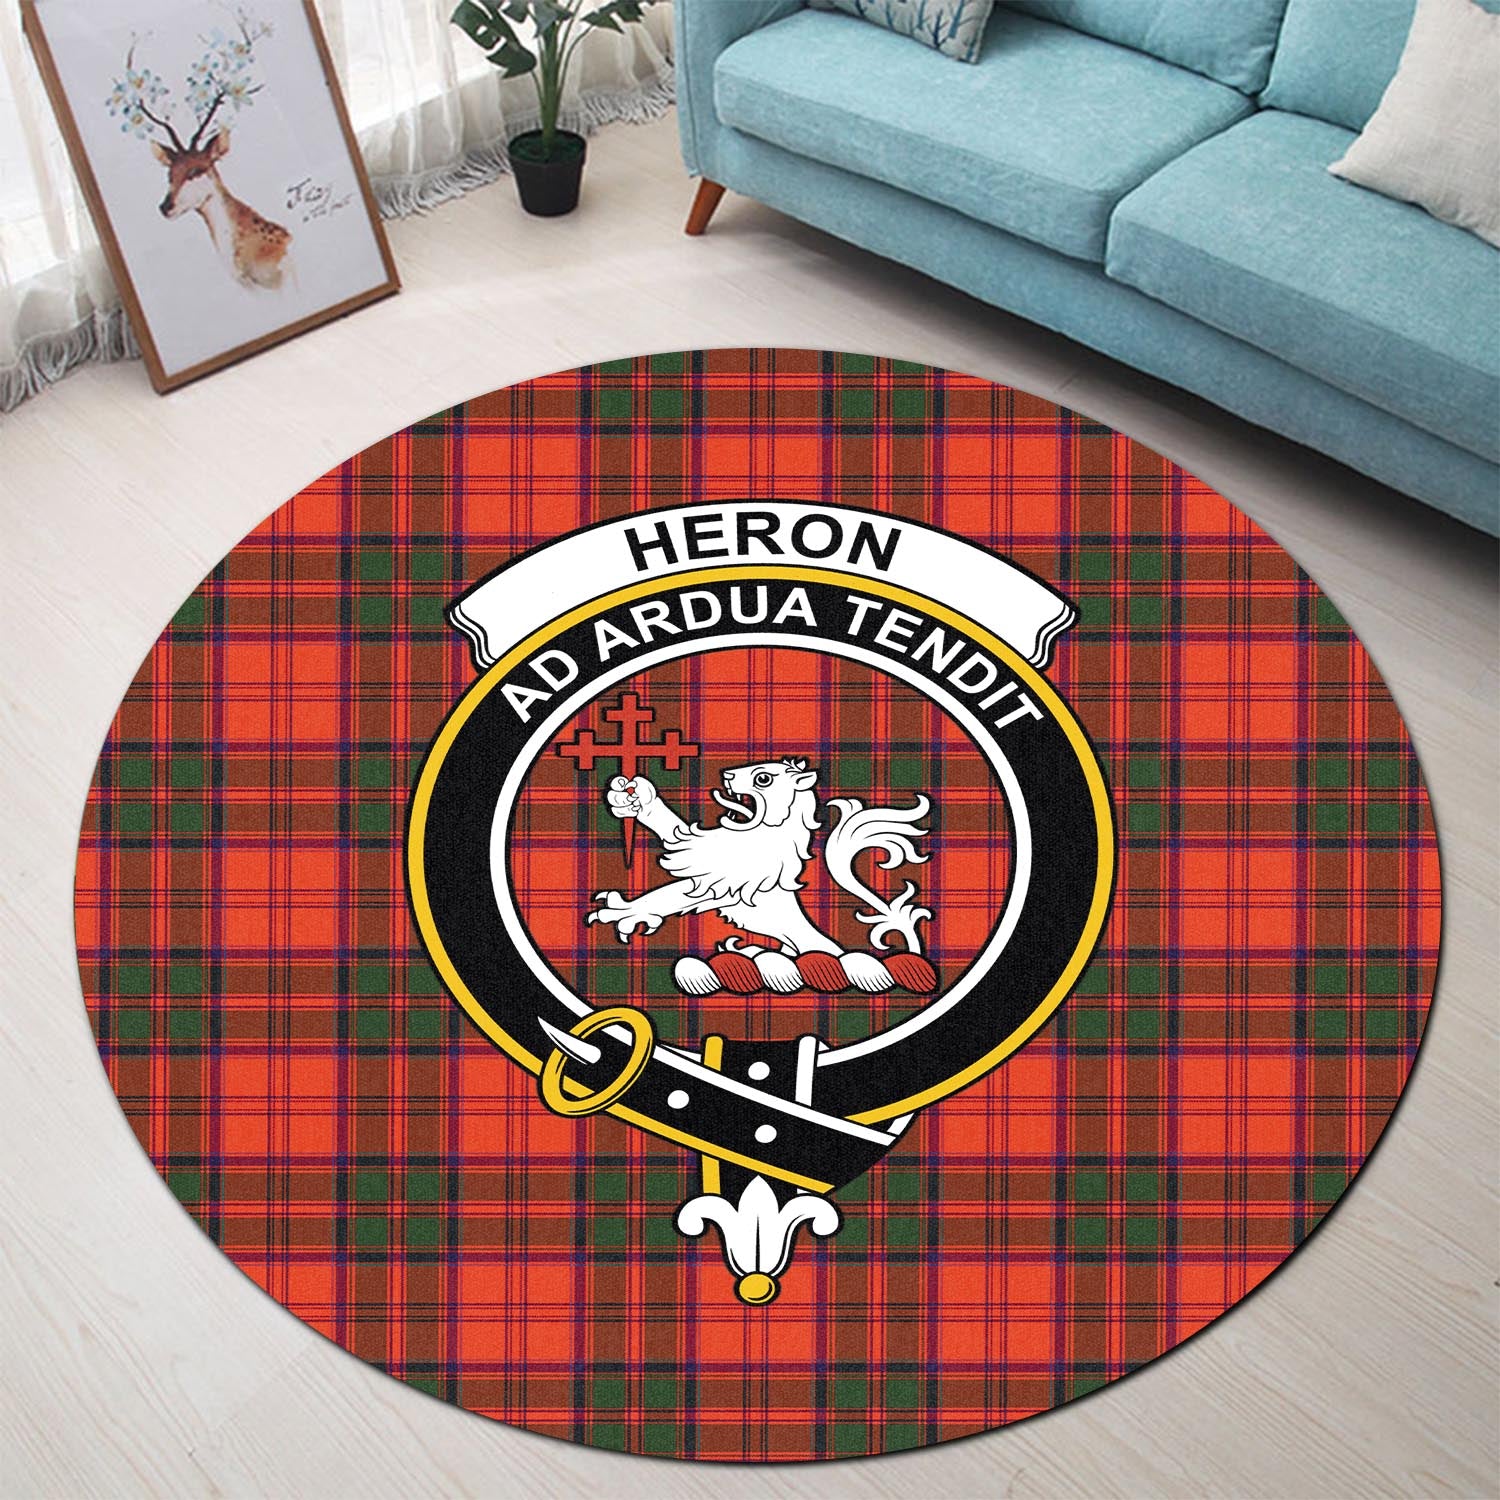 heron-tartan-round-rug-with-family-crest